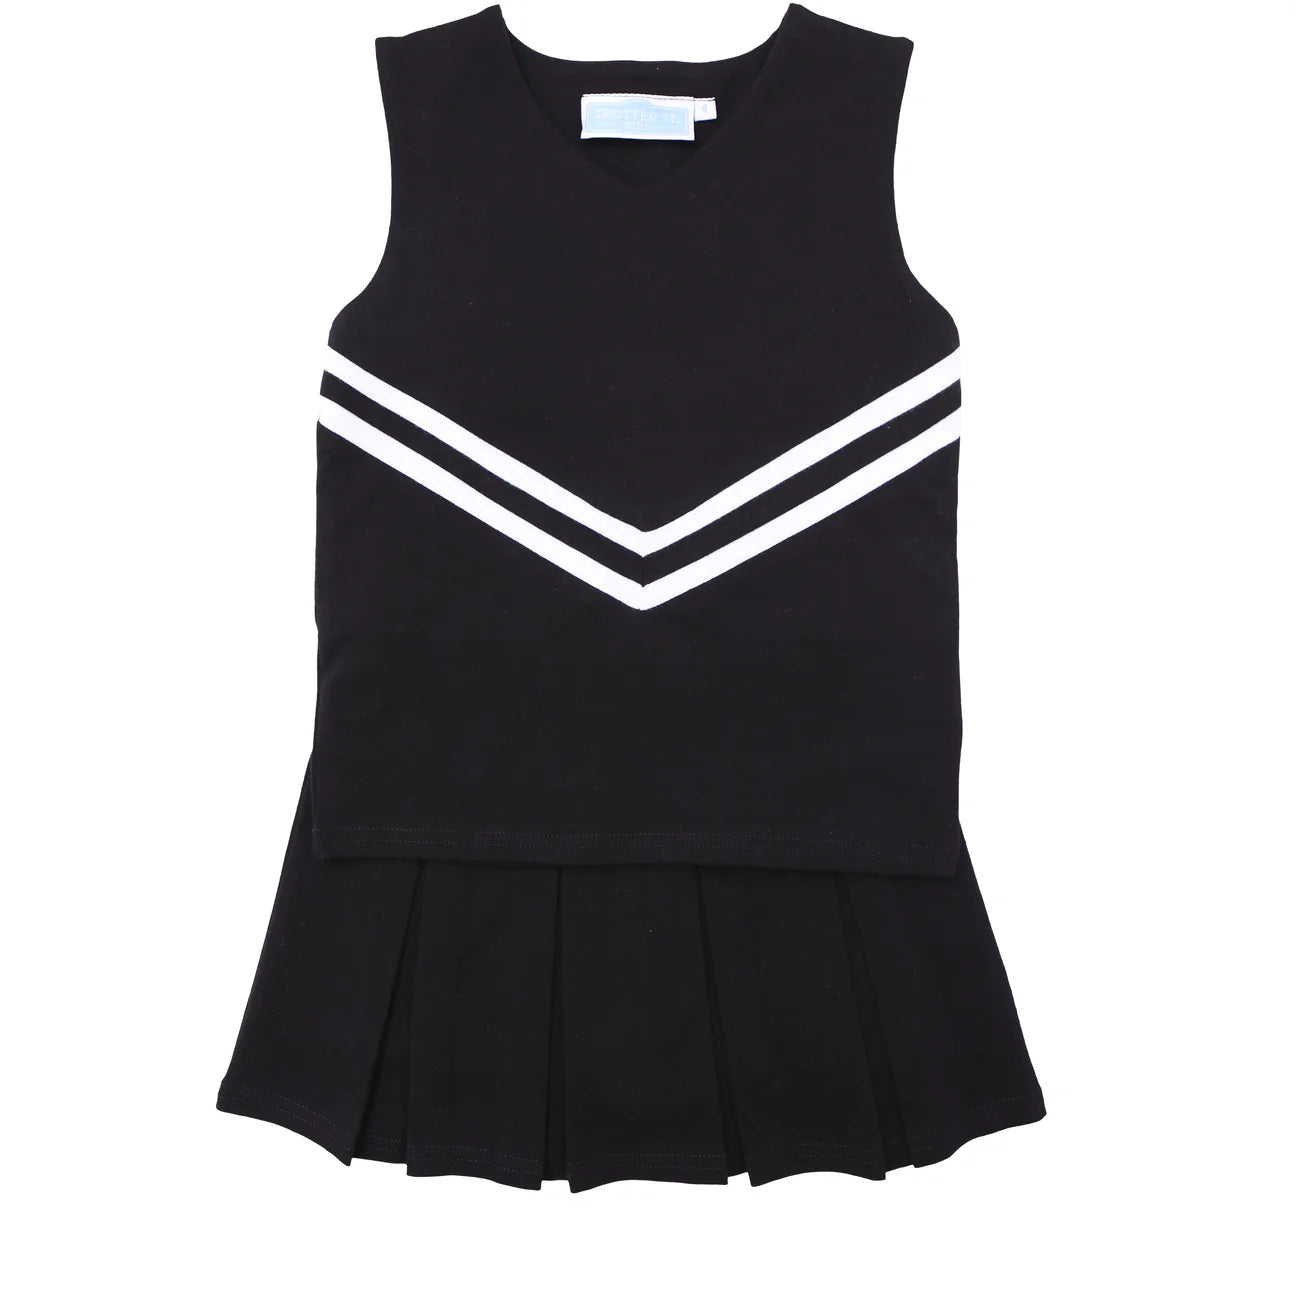 Black Cheer Uniform